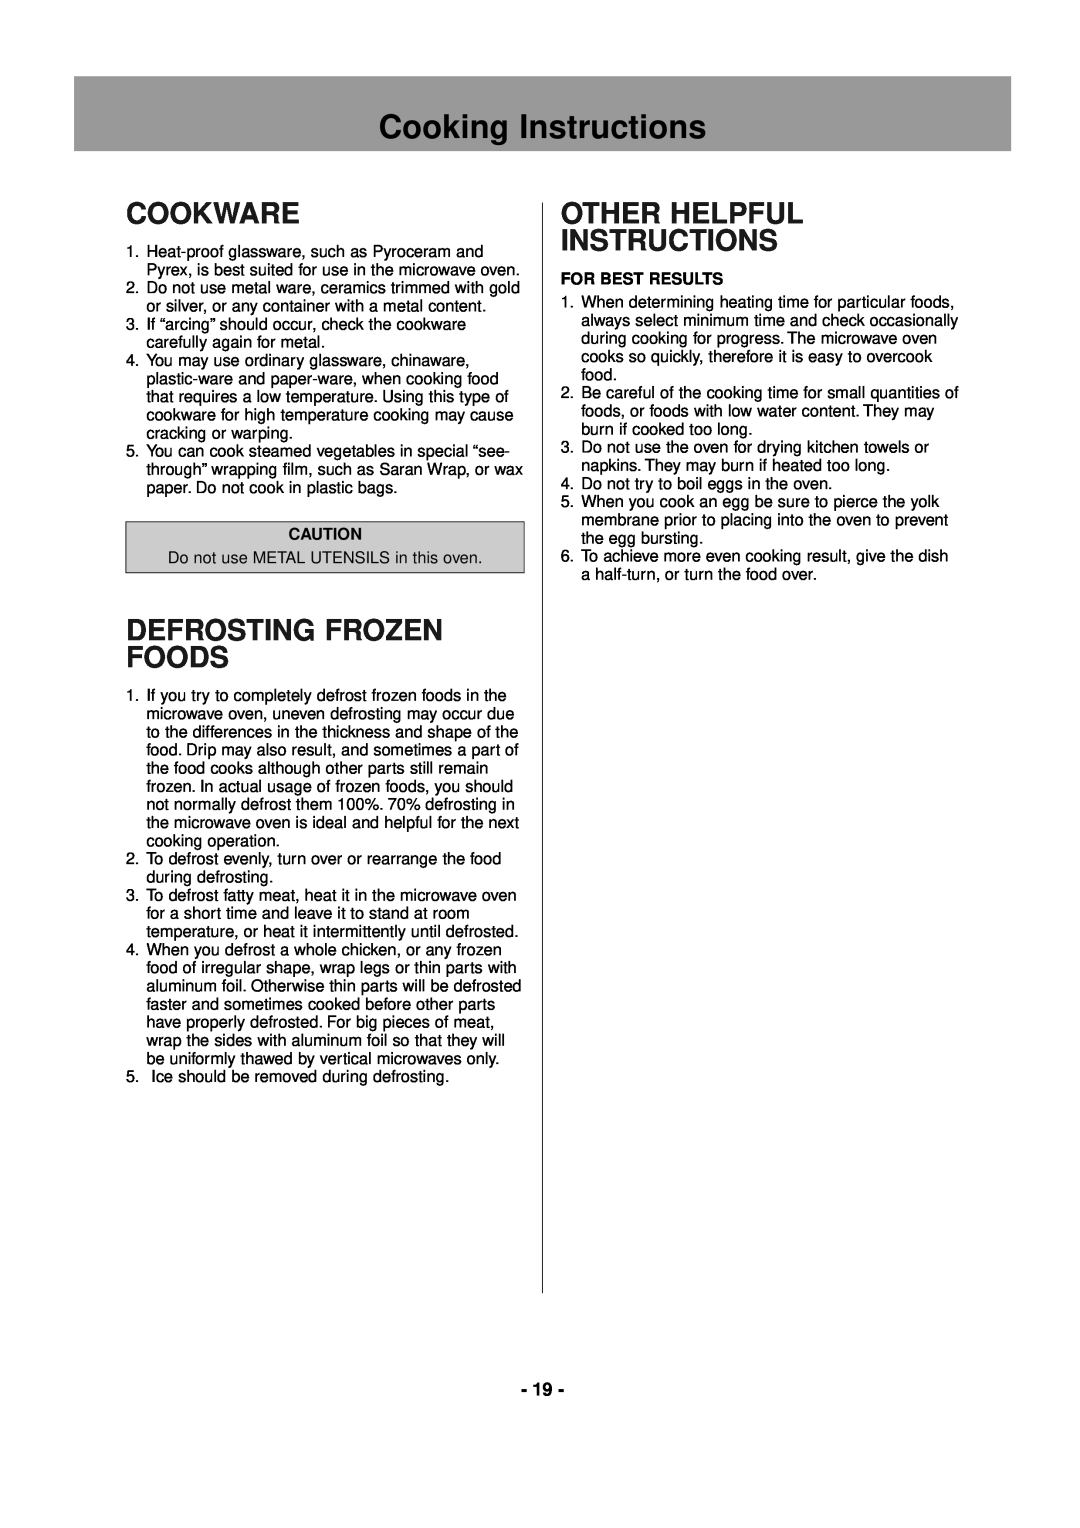 Panasonic NE-1856, NE-1846, NE-2146 Cooking Instructions, Cookware, Defrosting Frozen Foods, Other Helpful Instructions 